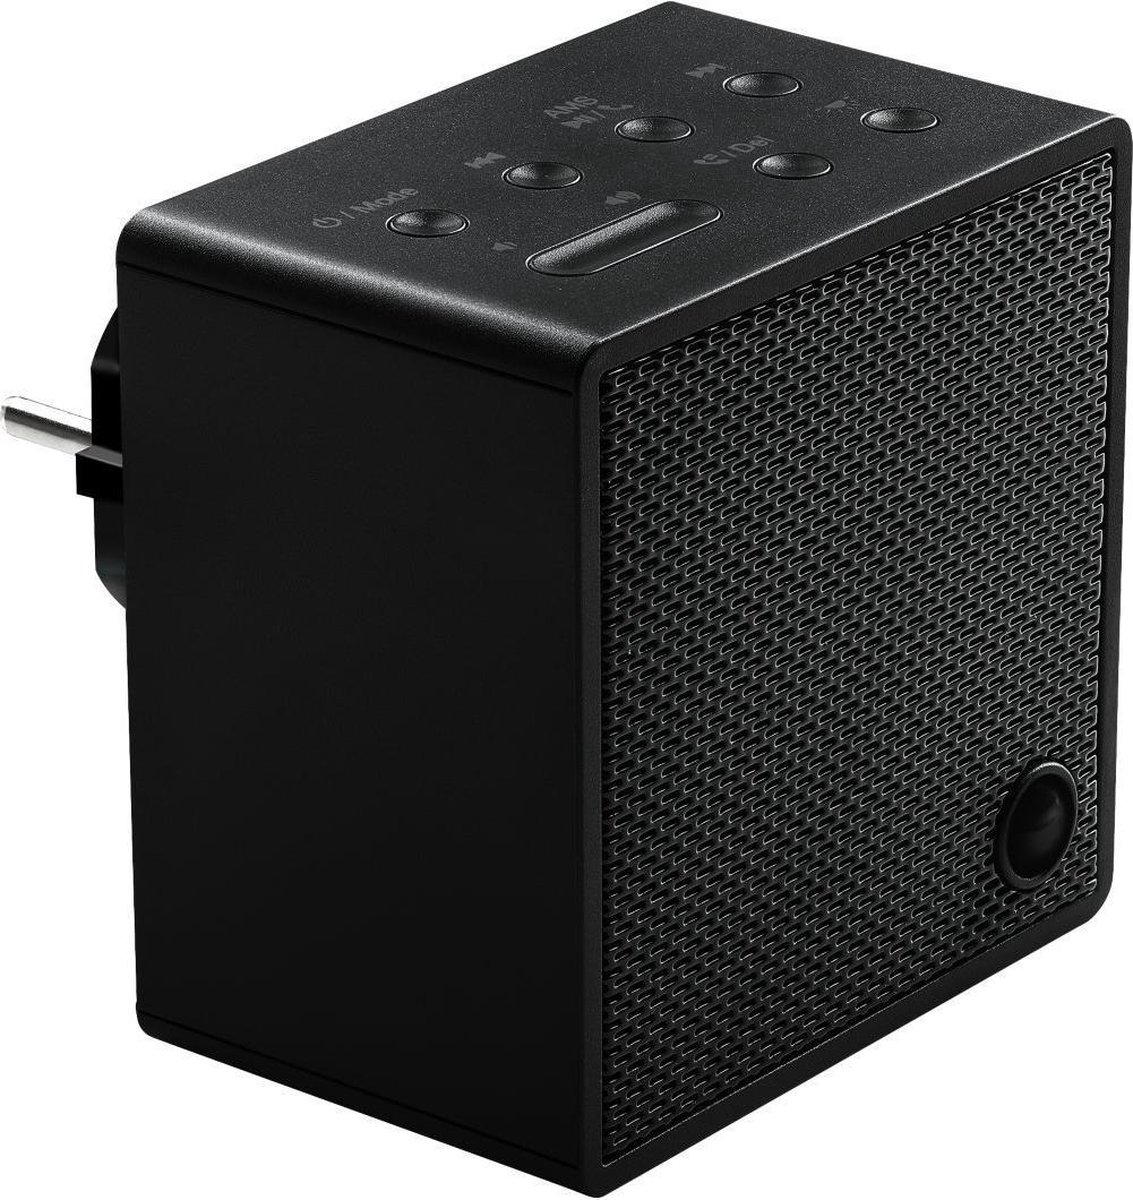 Misschien rand bekennen MEDION LIFE P65700 Stekker Bluetooth speaker met FM radio | bol.com